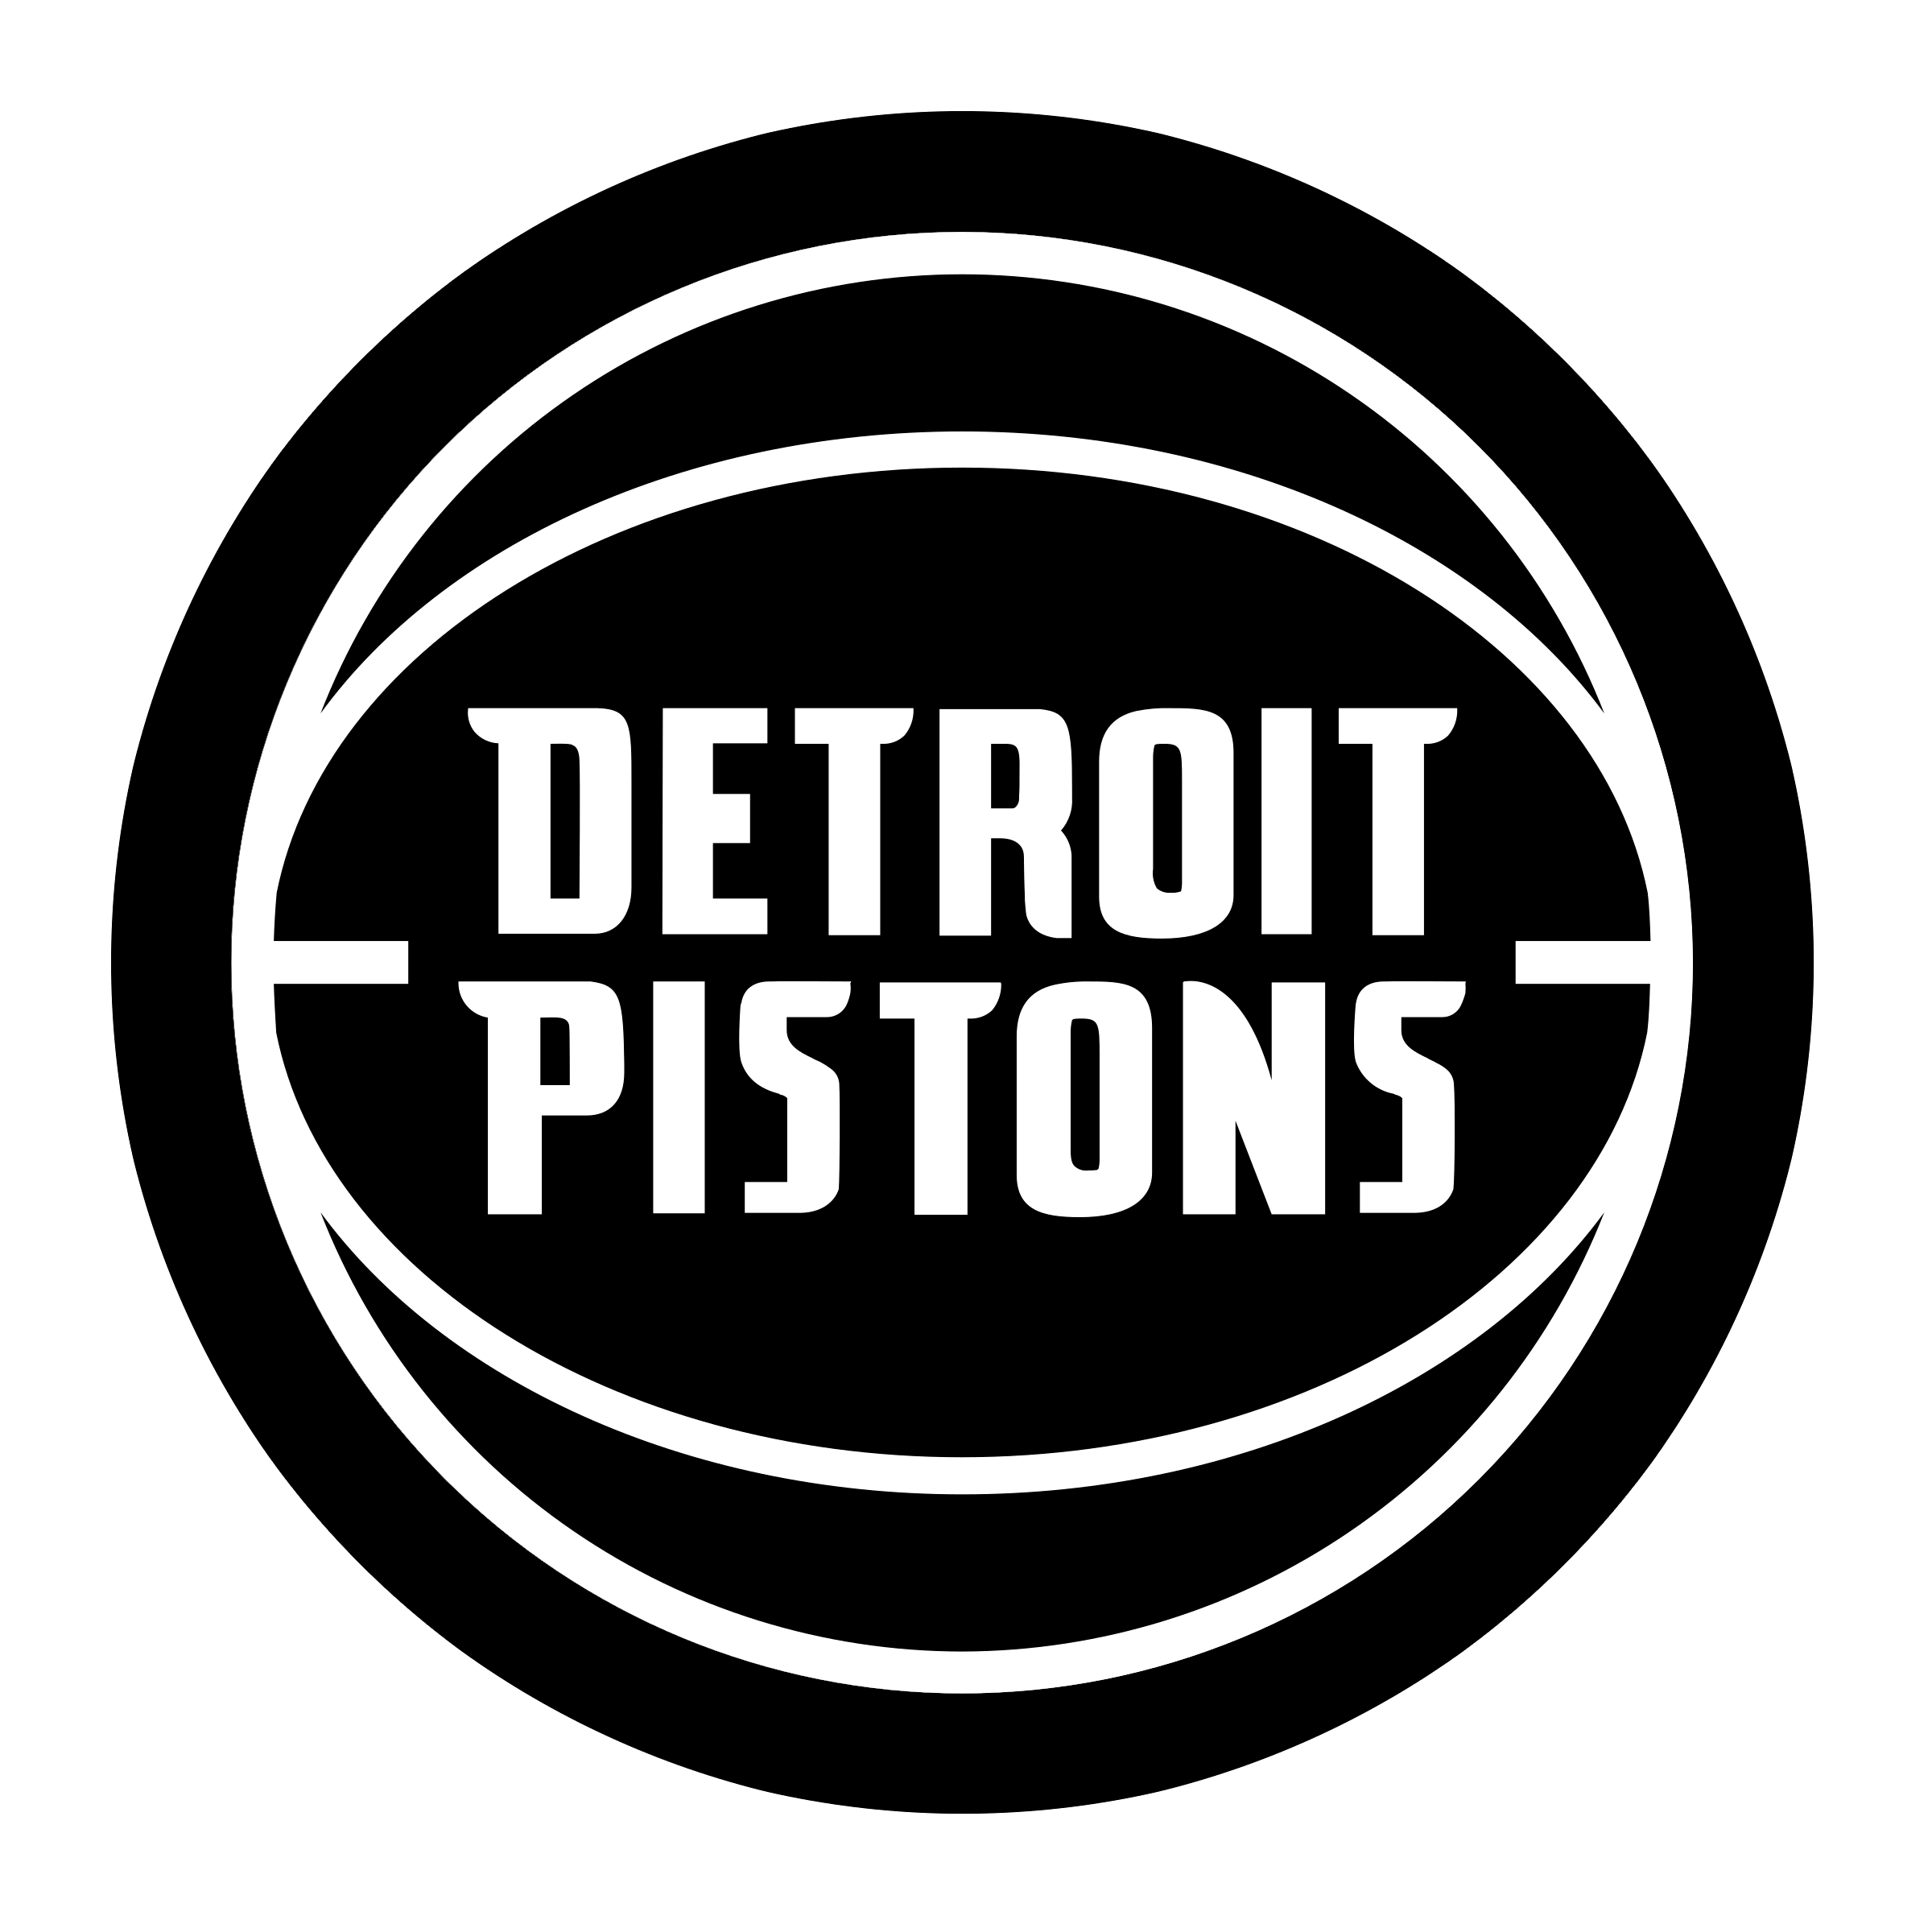 Detroit Pistons Logo - Detroit Pistons Logo PNG Transparent & SVG Vector